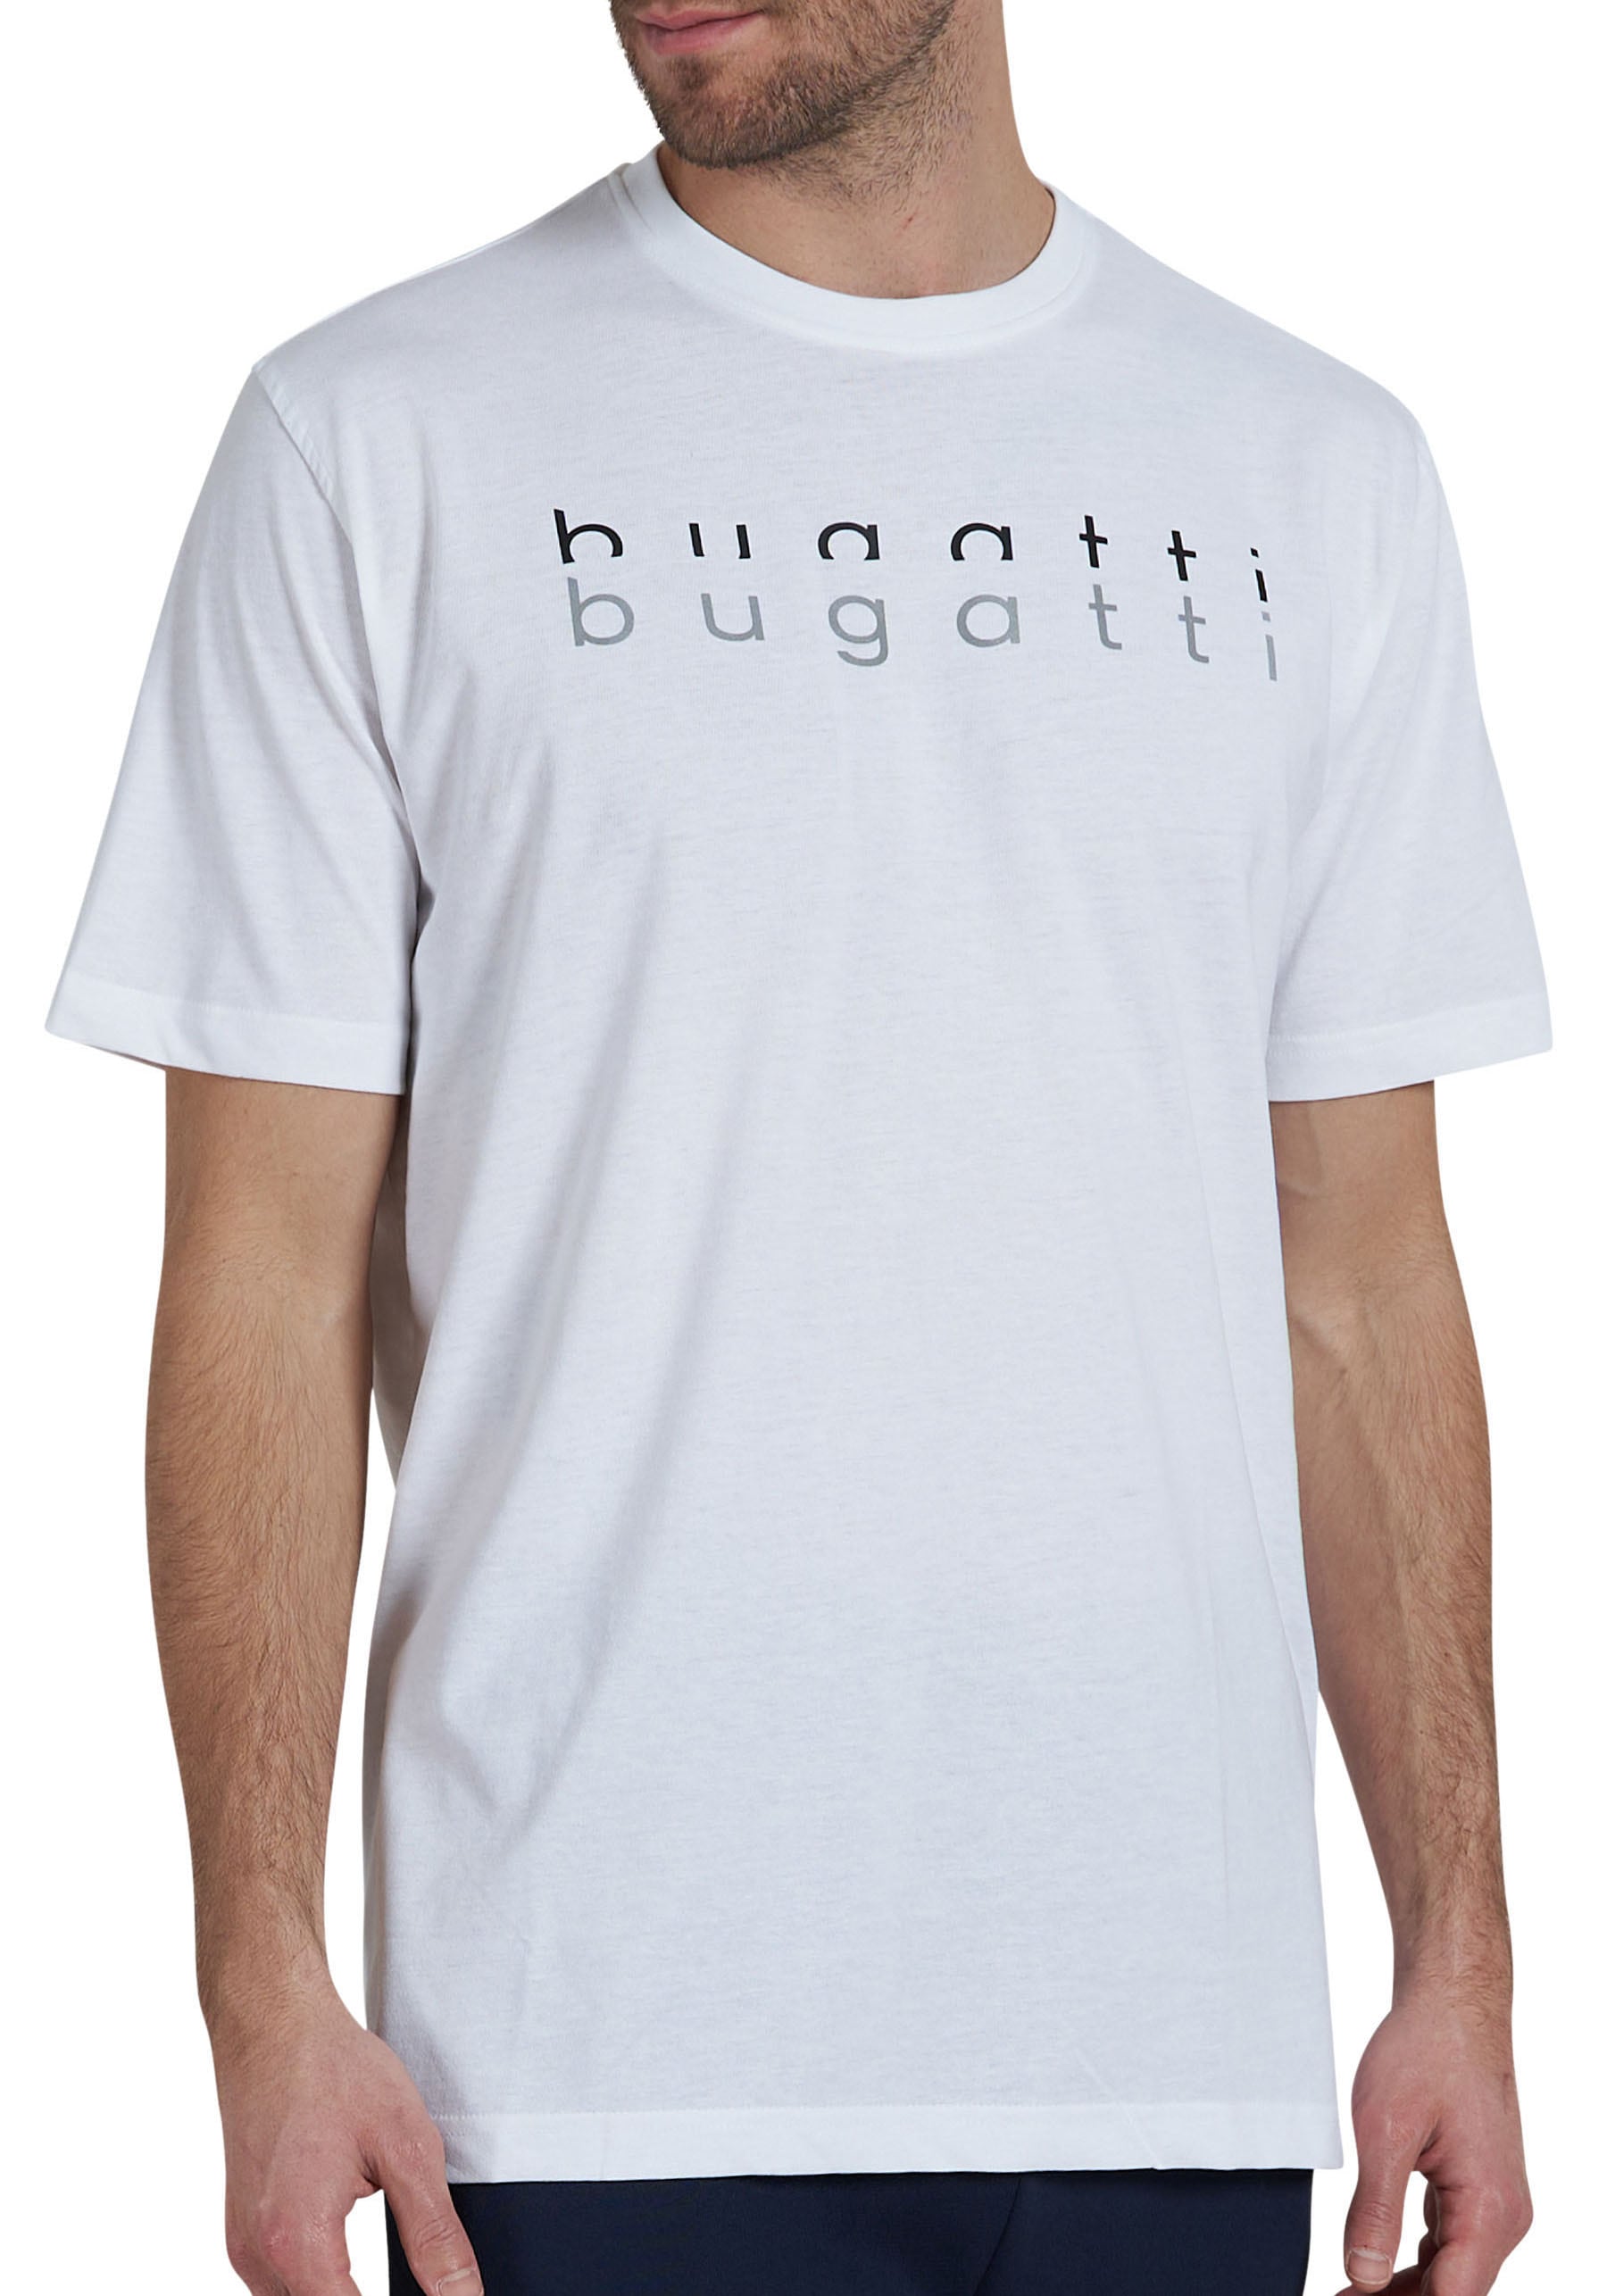 bugatti T-Shirt von Bugatti